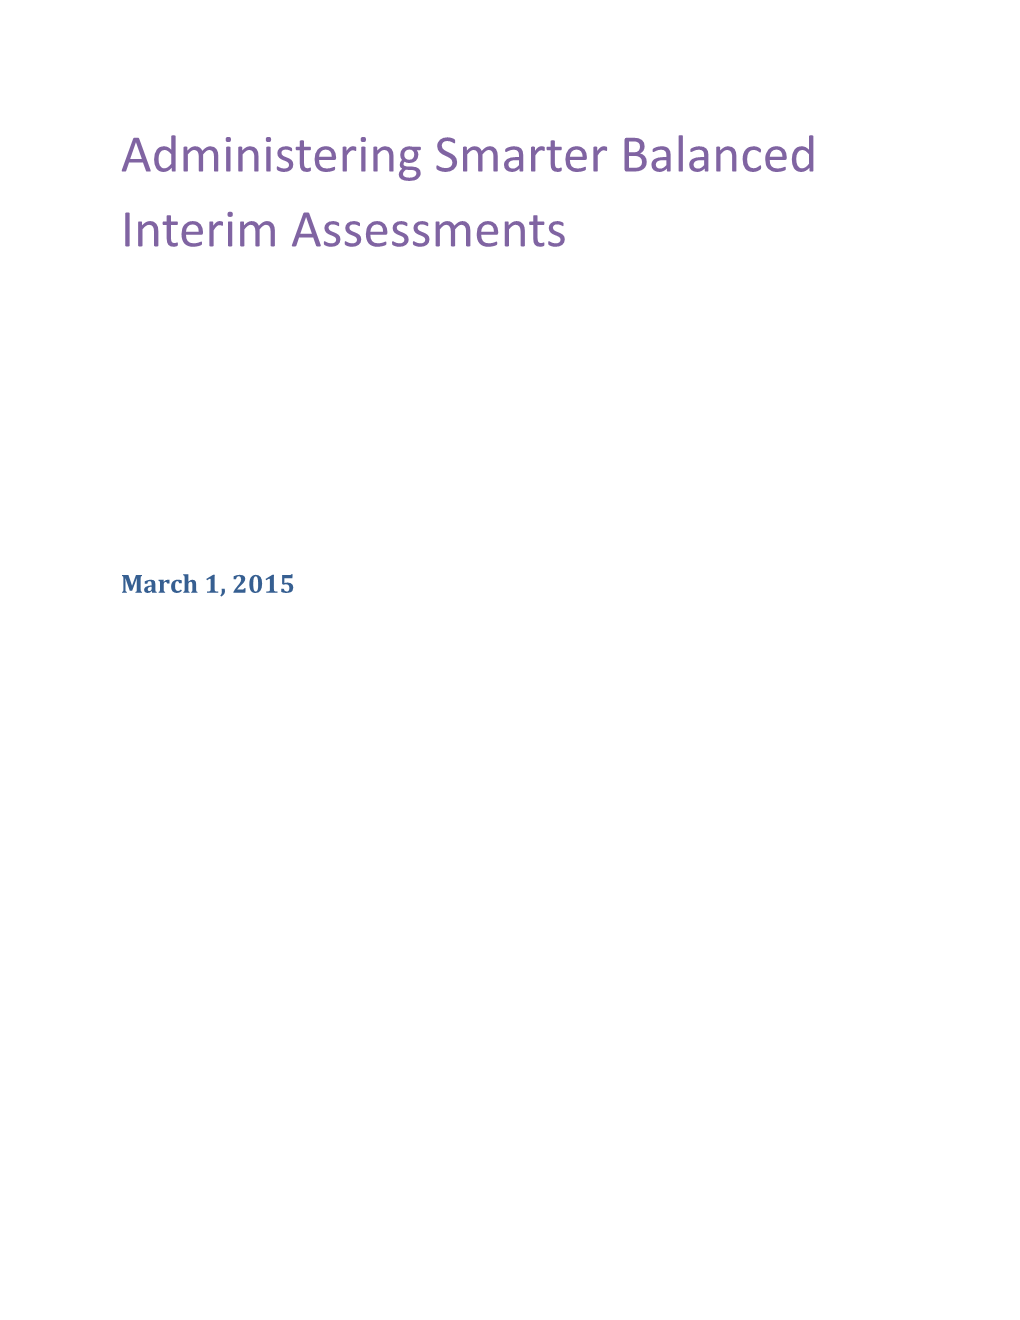 Administering Smarter Balanced Interim Assessments